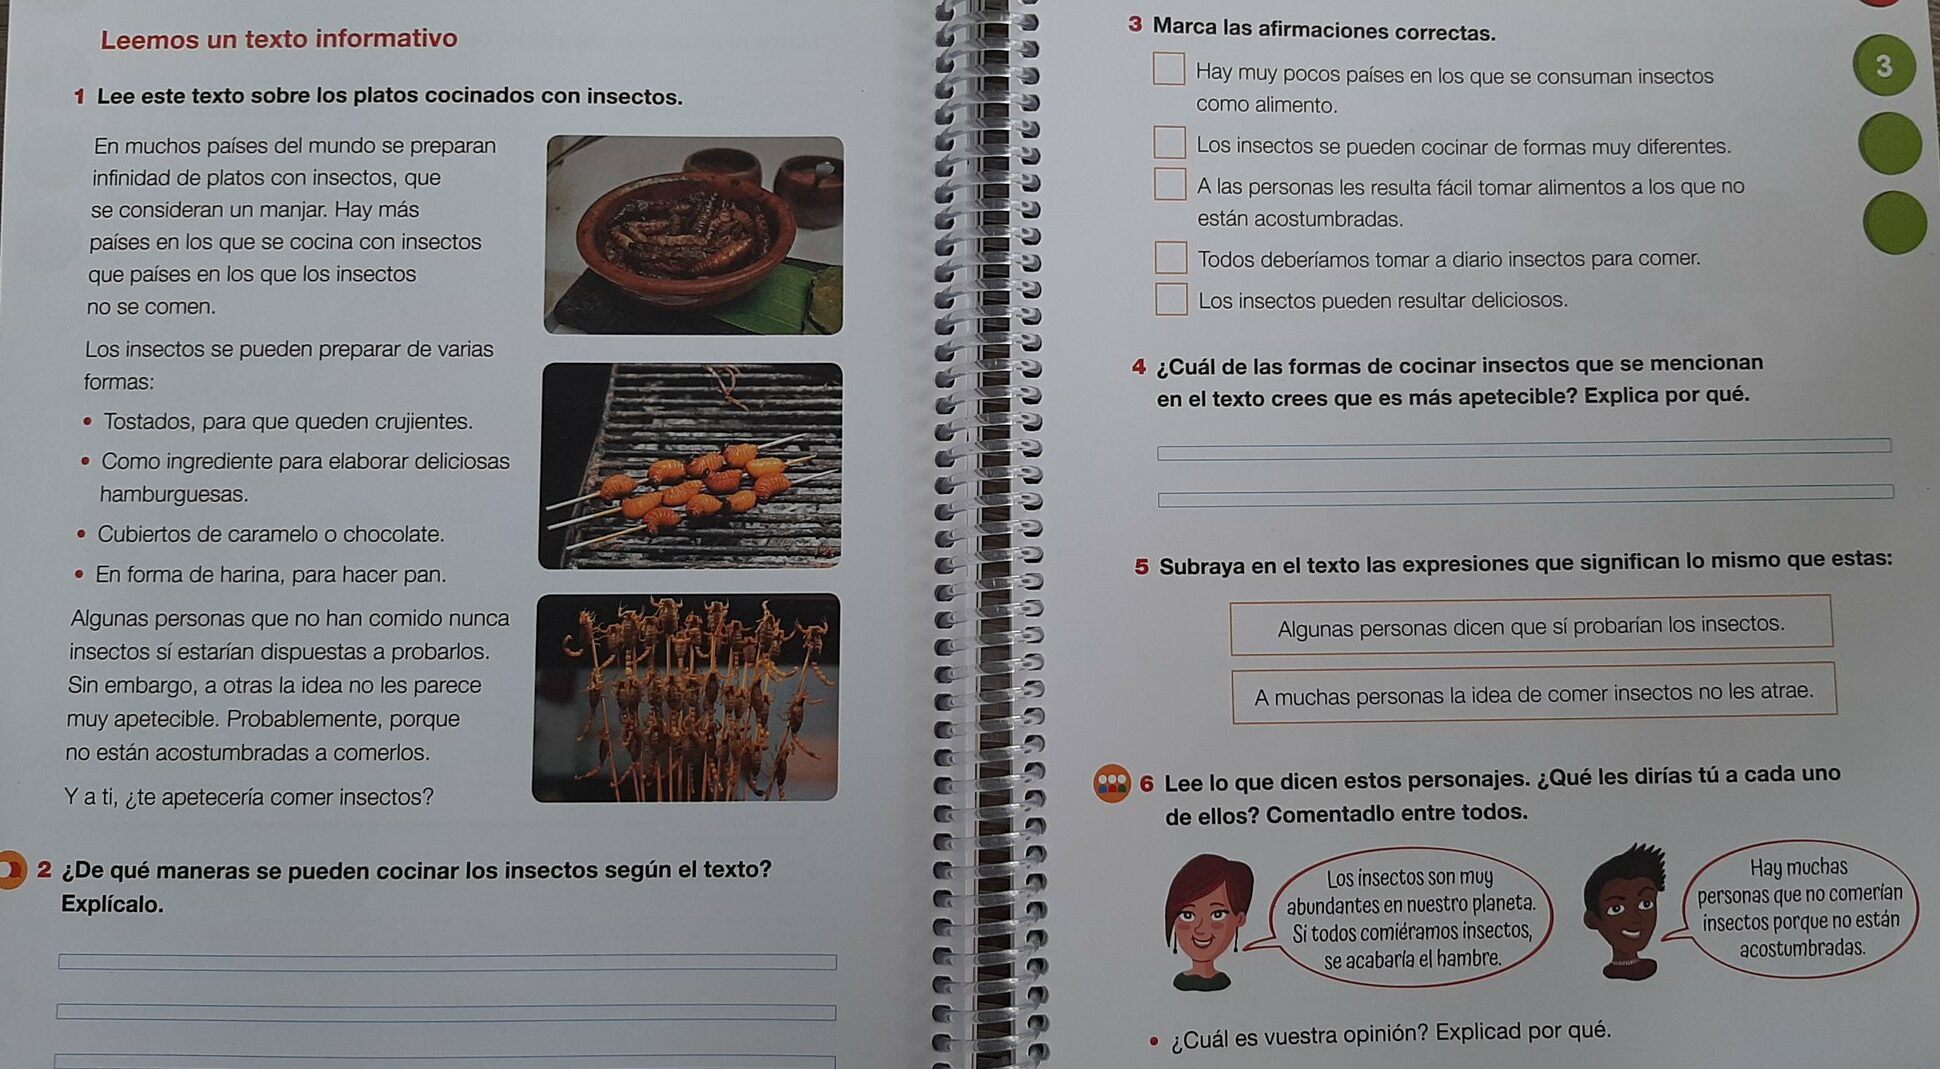 Vox vuelve a señalar a Santillana por un libro que incita a los alumnos a comer insectos